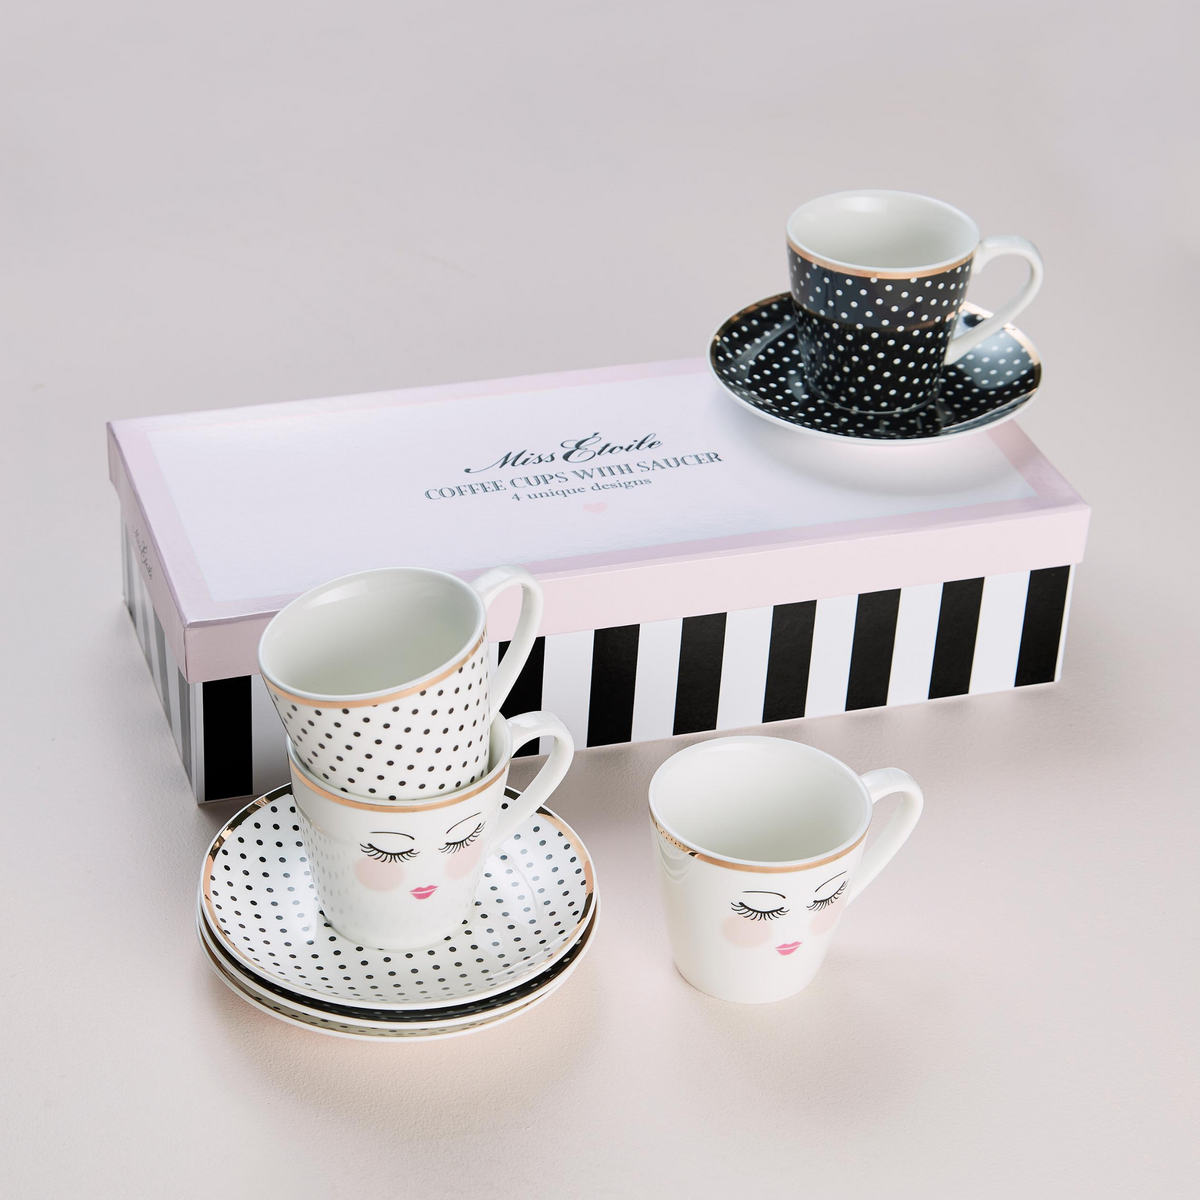 Miss Etoile Lace Coffee Mug - SAK Home